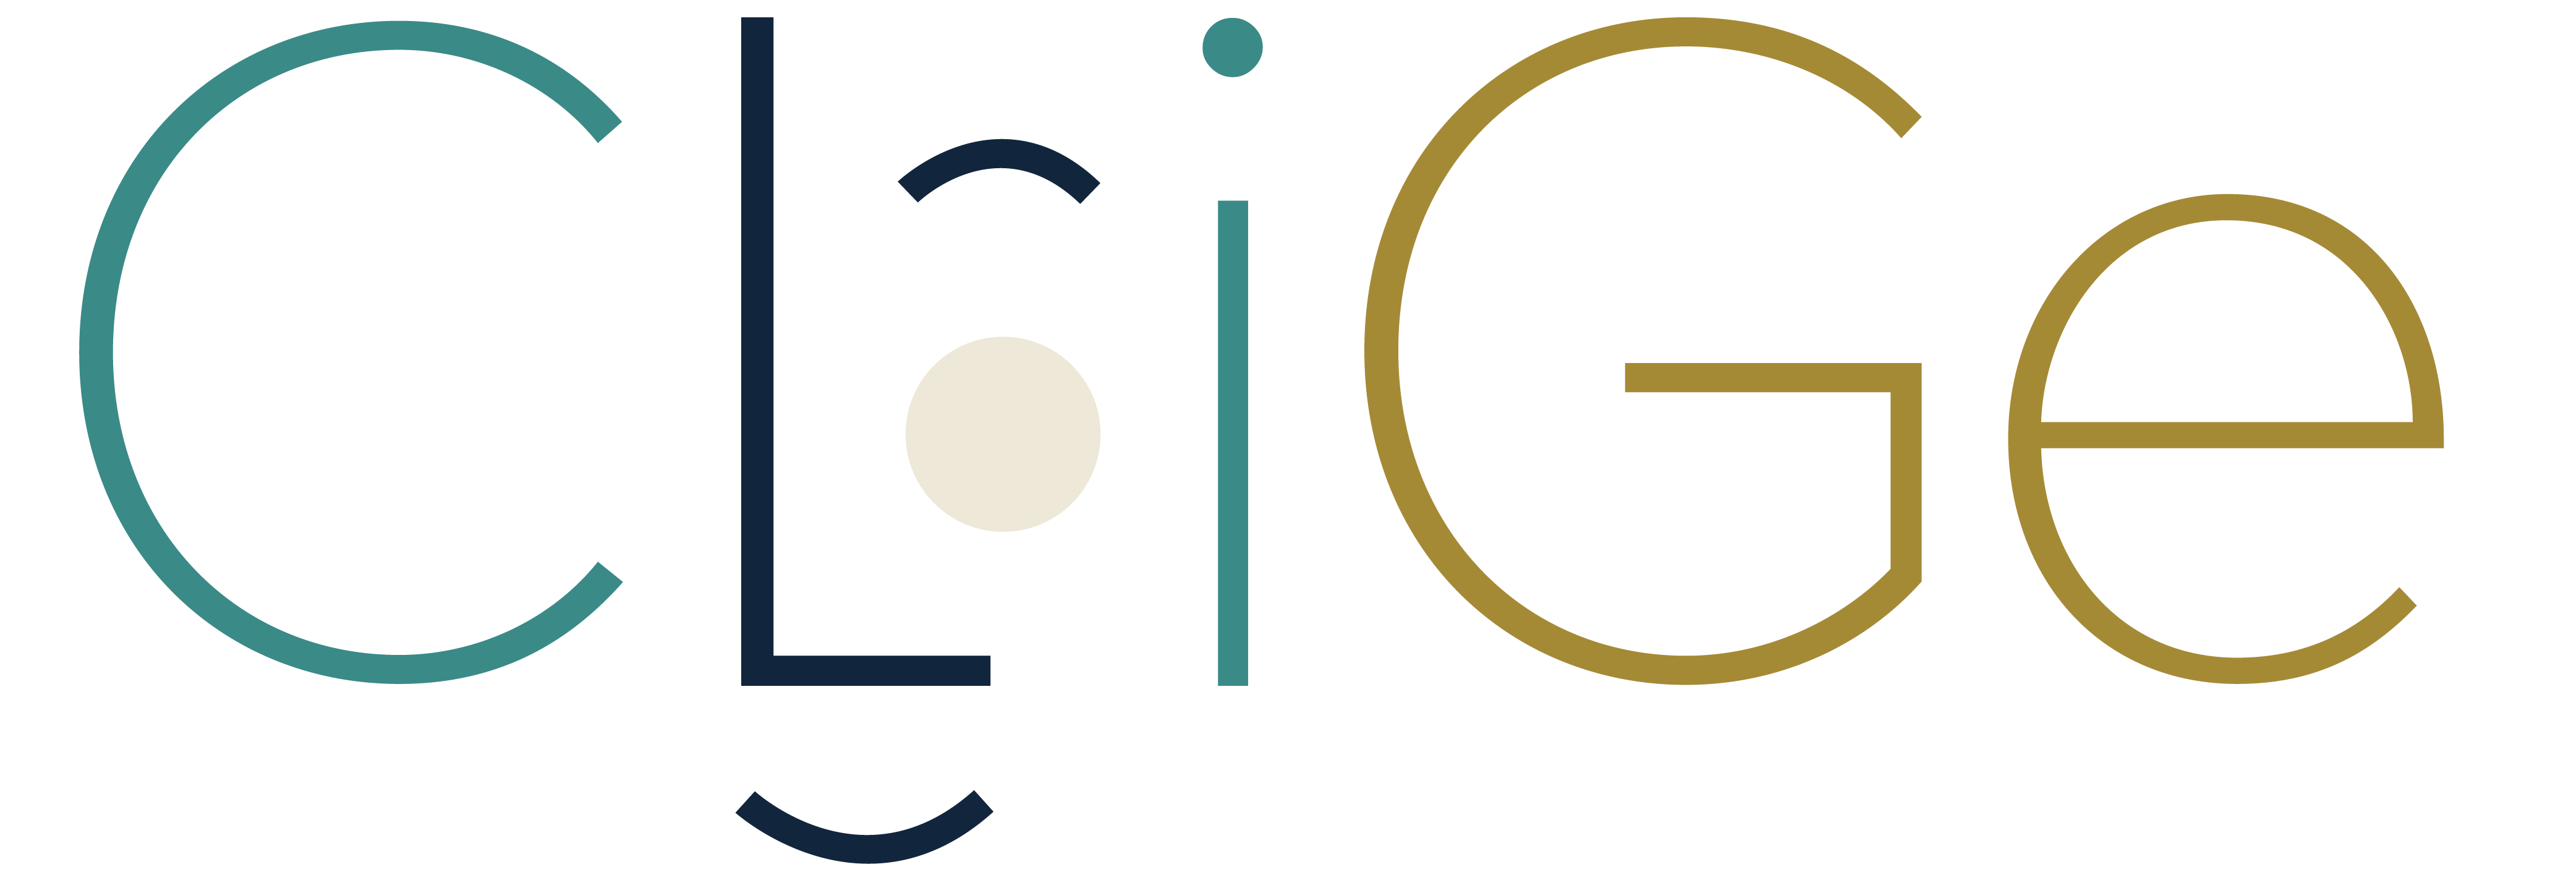 Logo du CLIGe : présentation